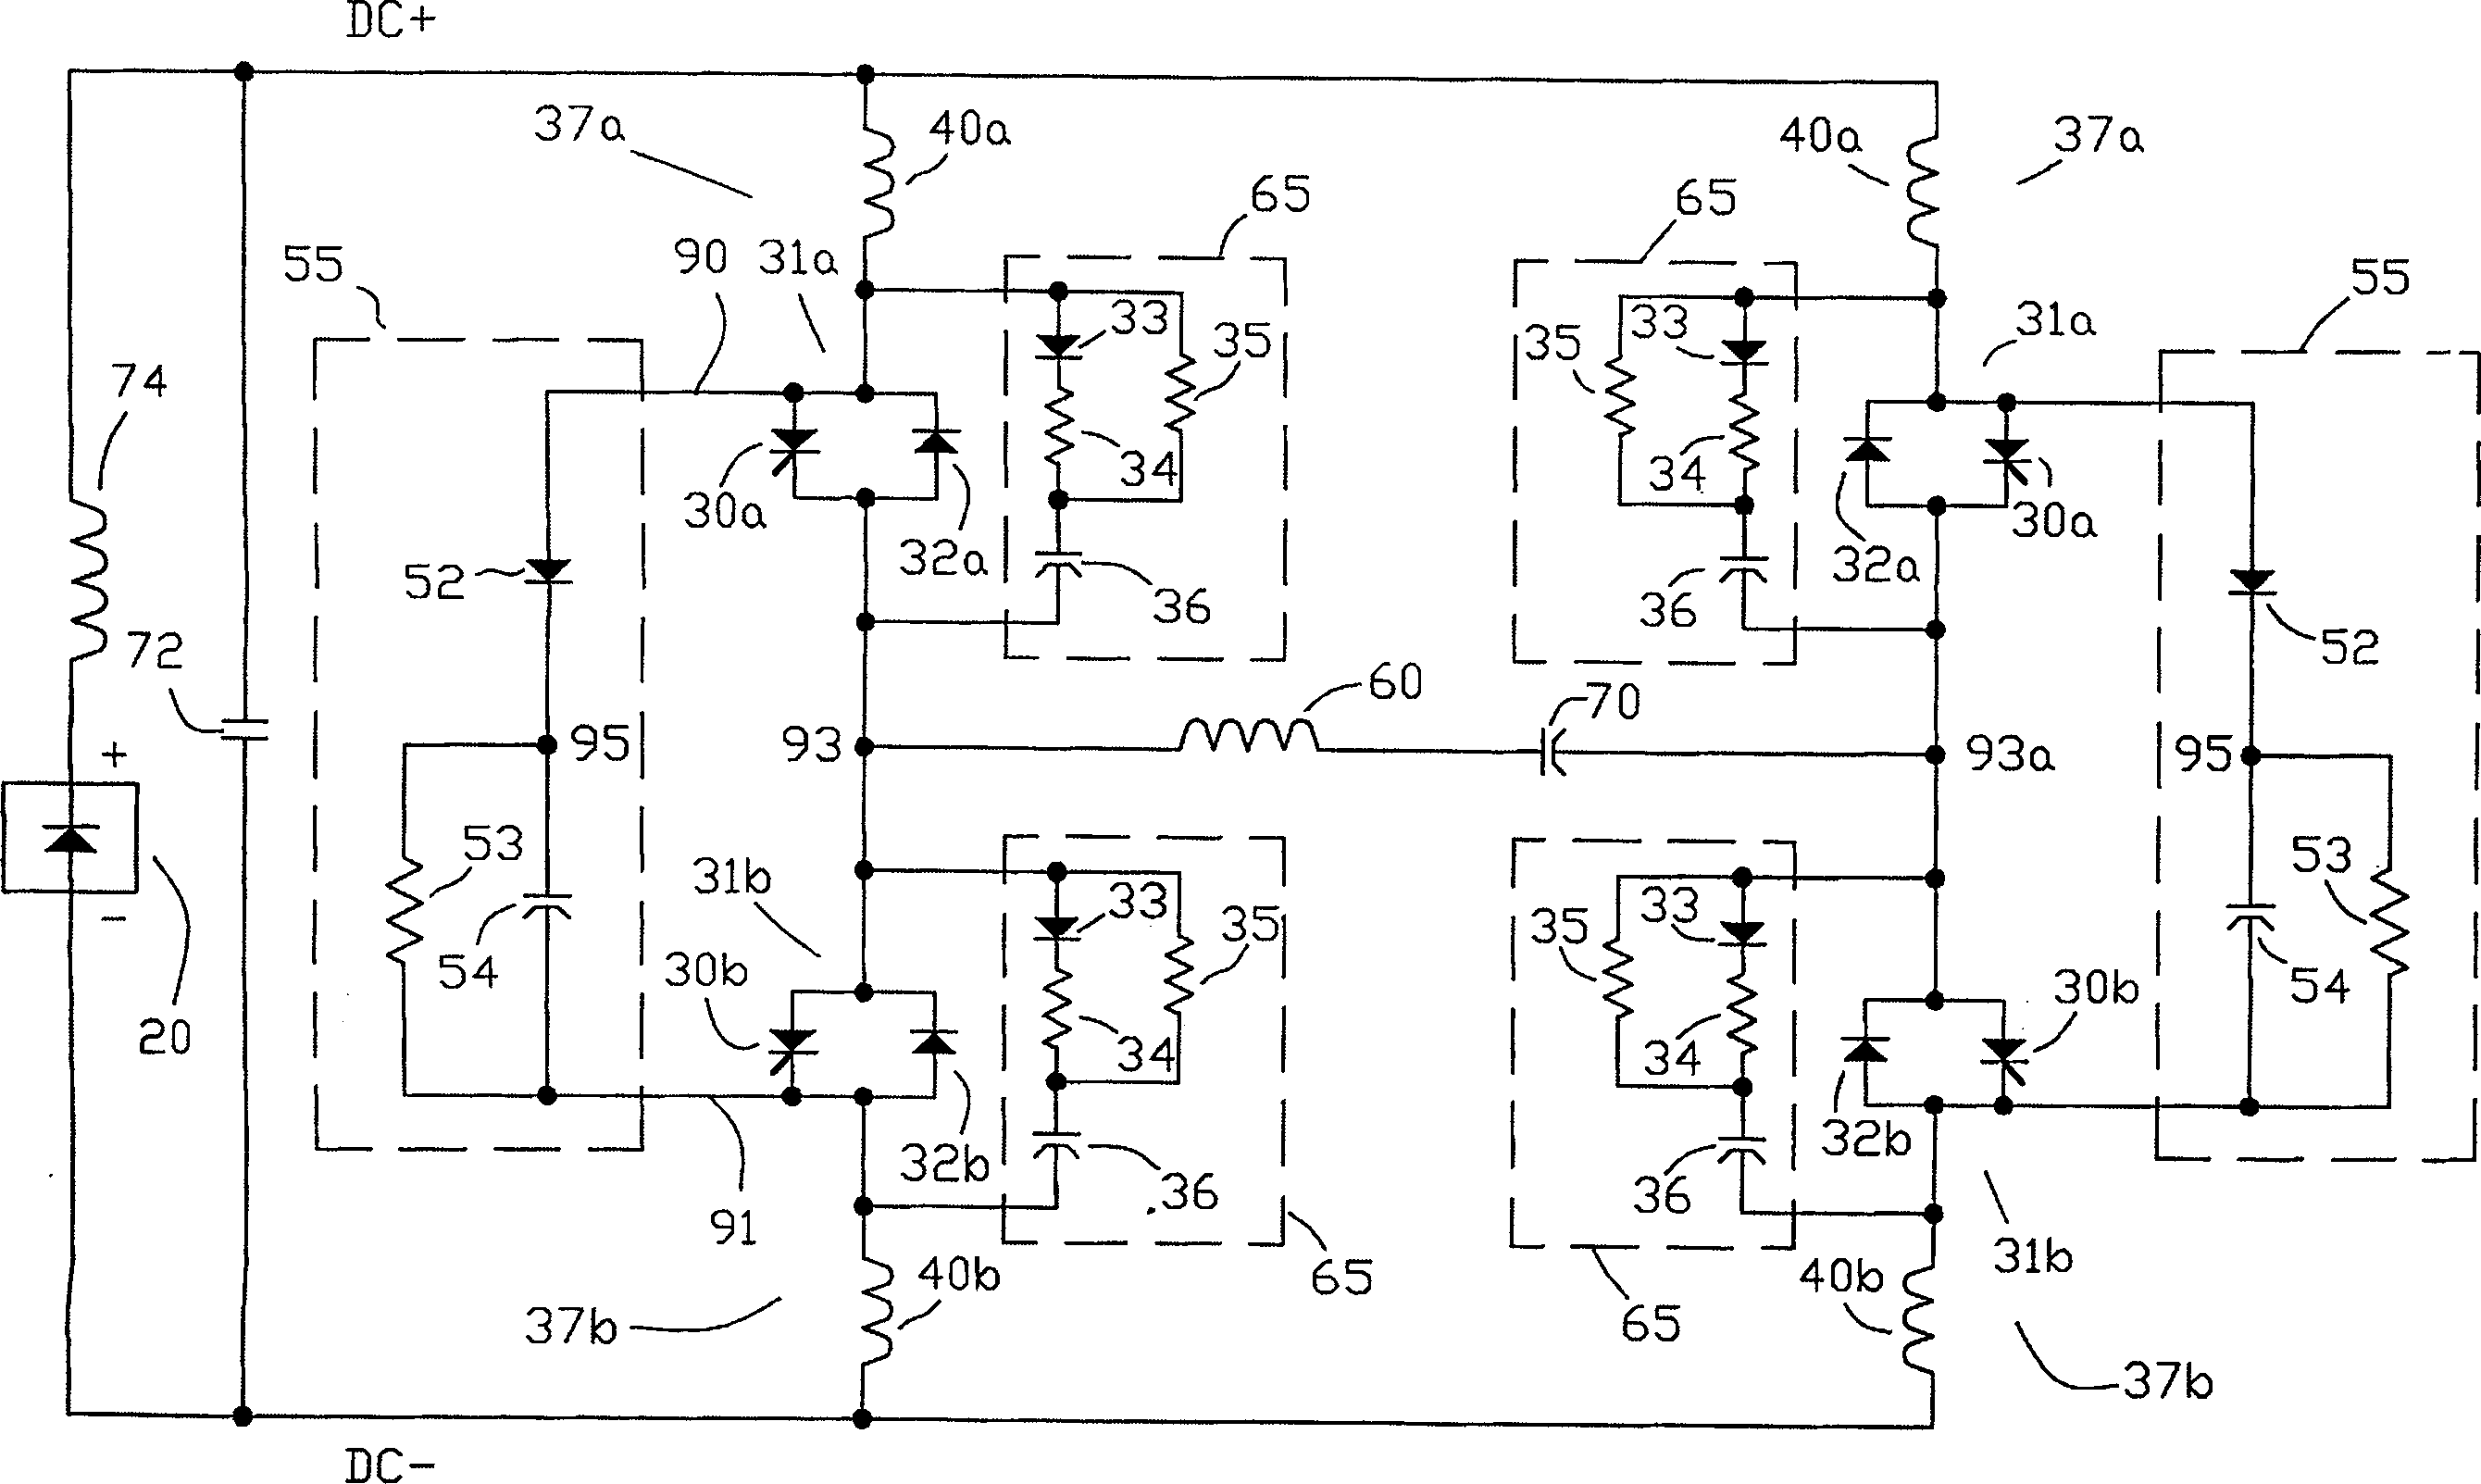 Fault tolerant power supply conversion circuit